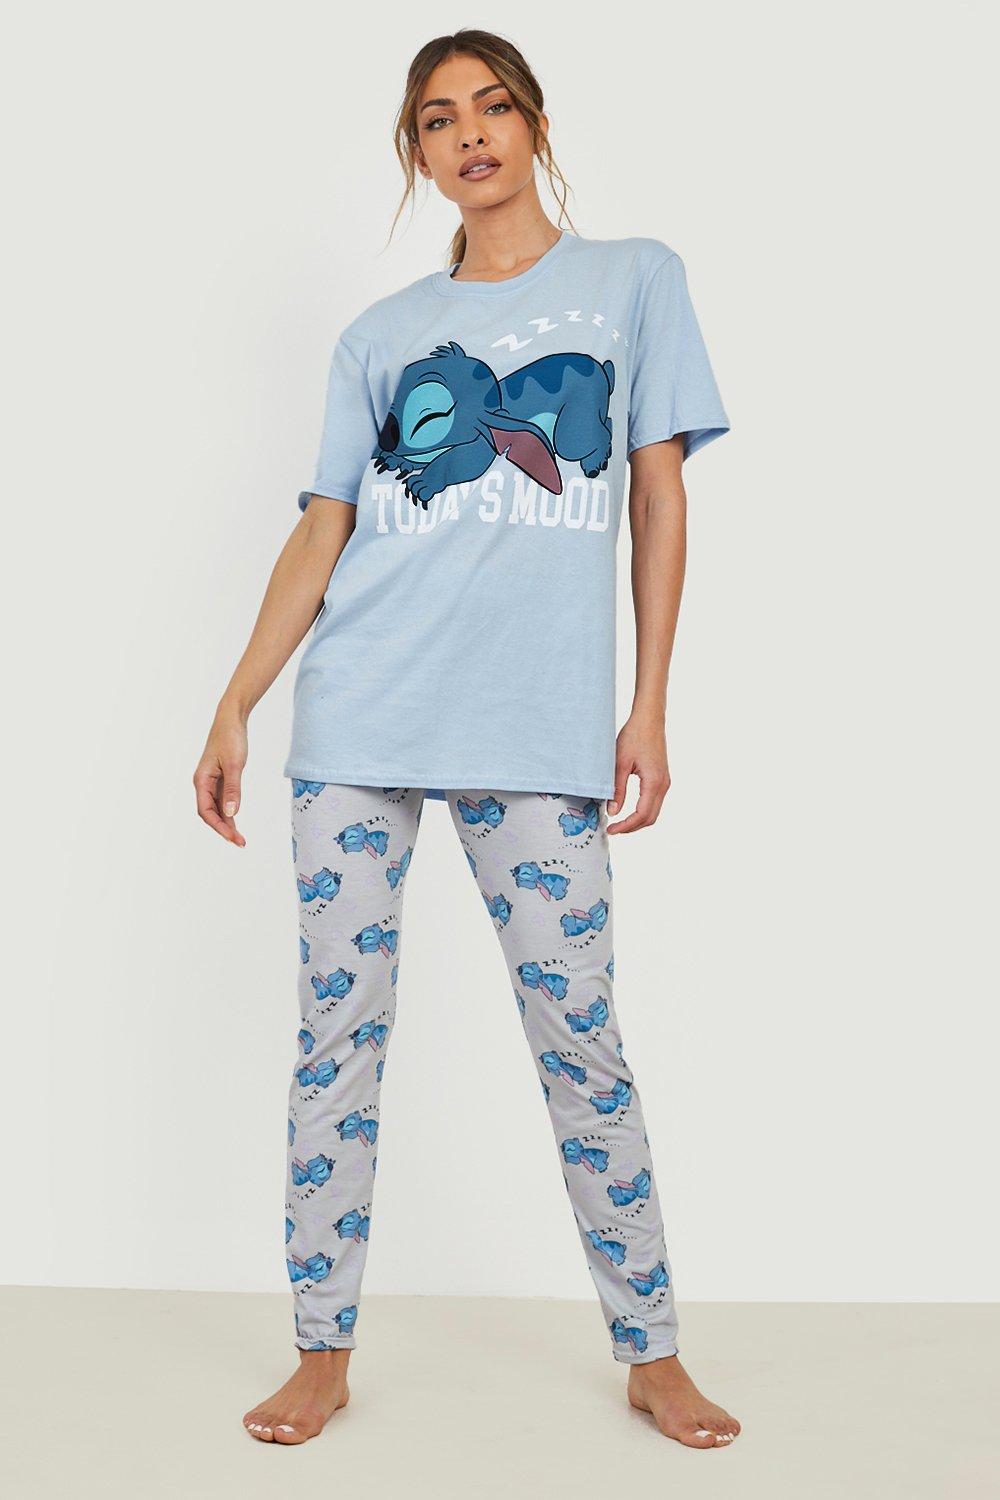 https://media.boohoo.com/i/boohoo/gzz22242_blue_xl_2/female-blue-disney-lilo-&-stitch-pyjama-t-shirt-&-legging-set